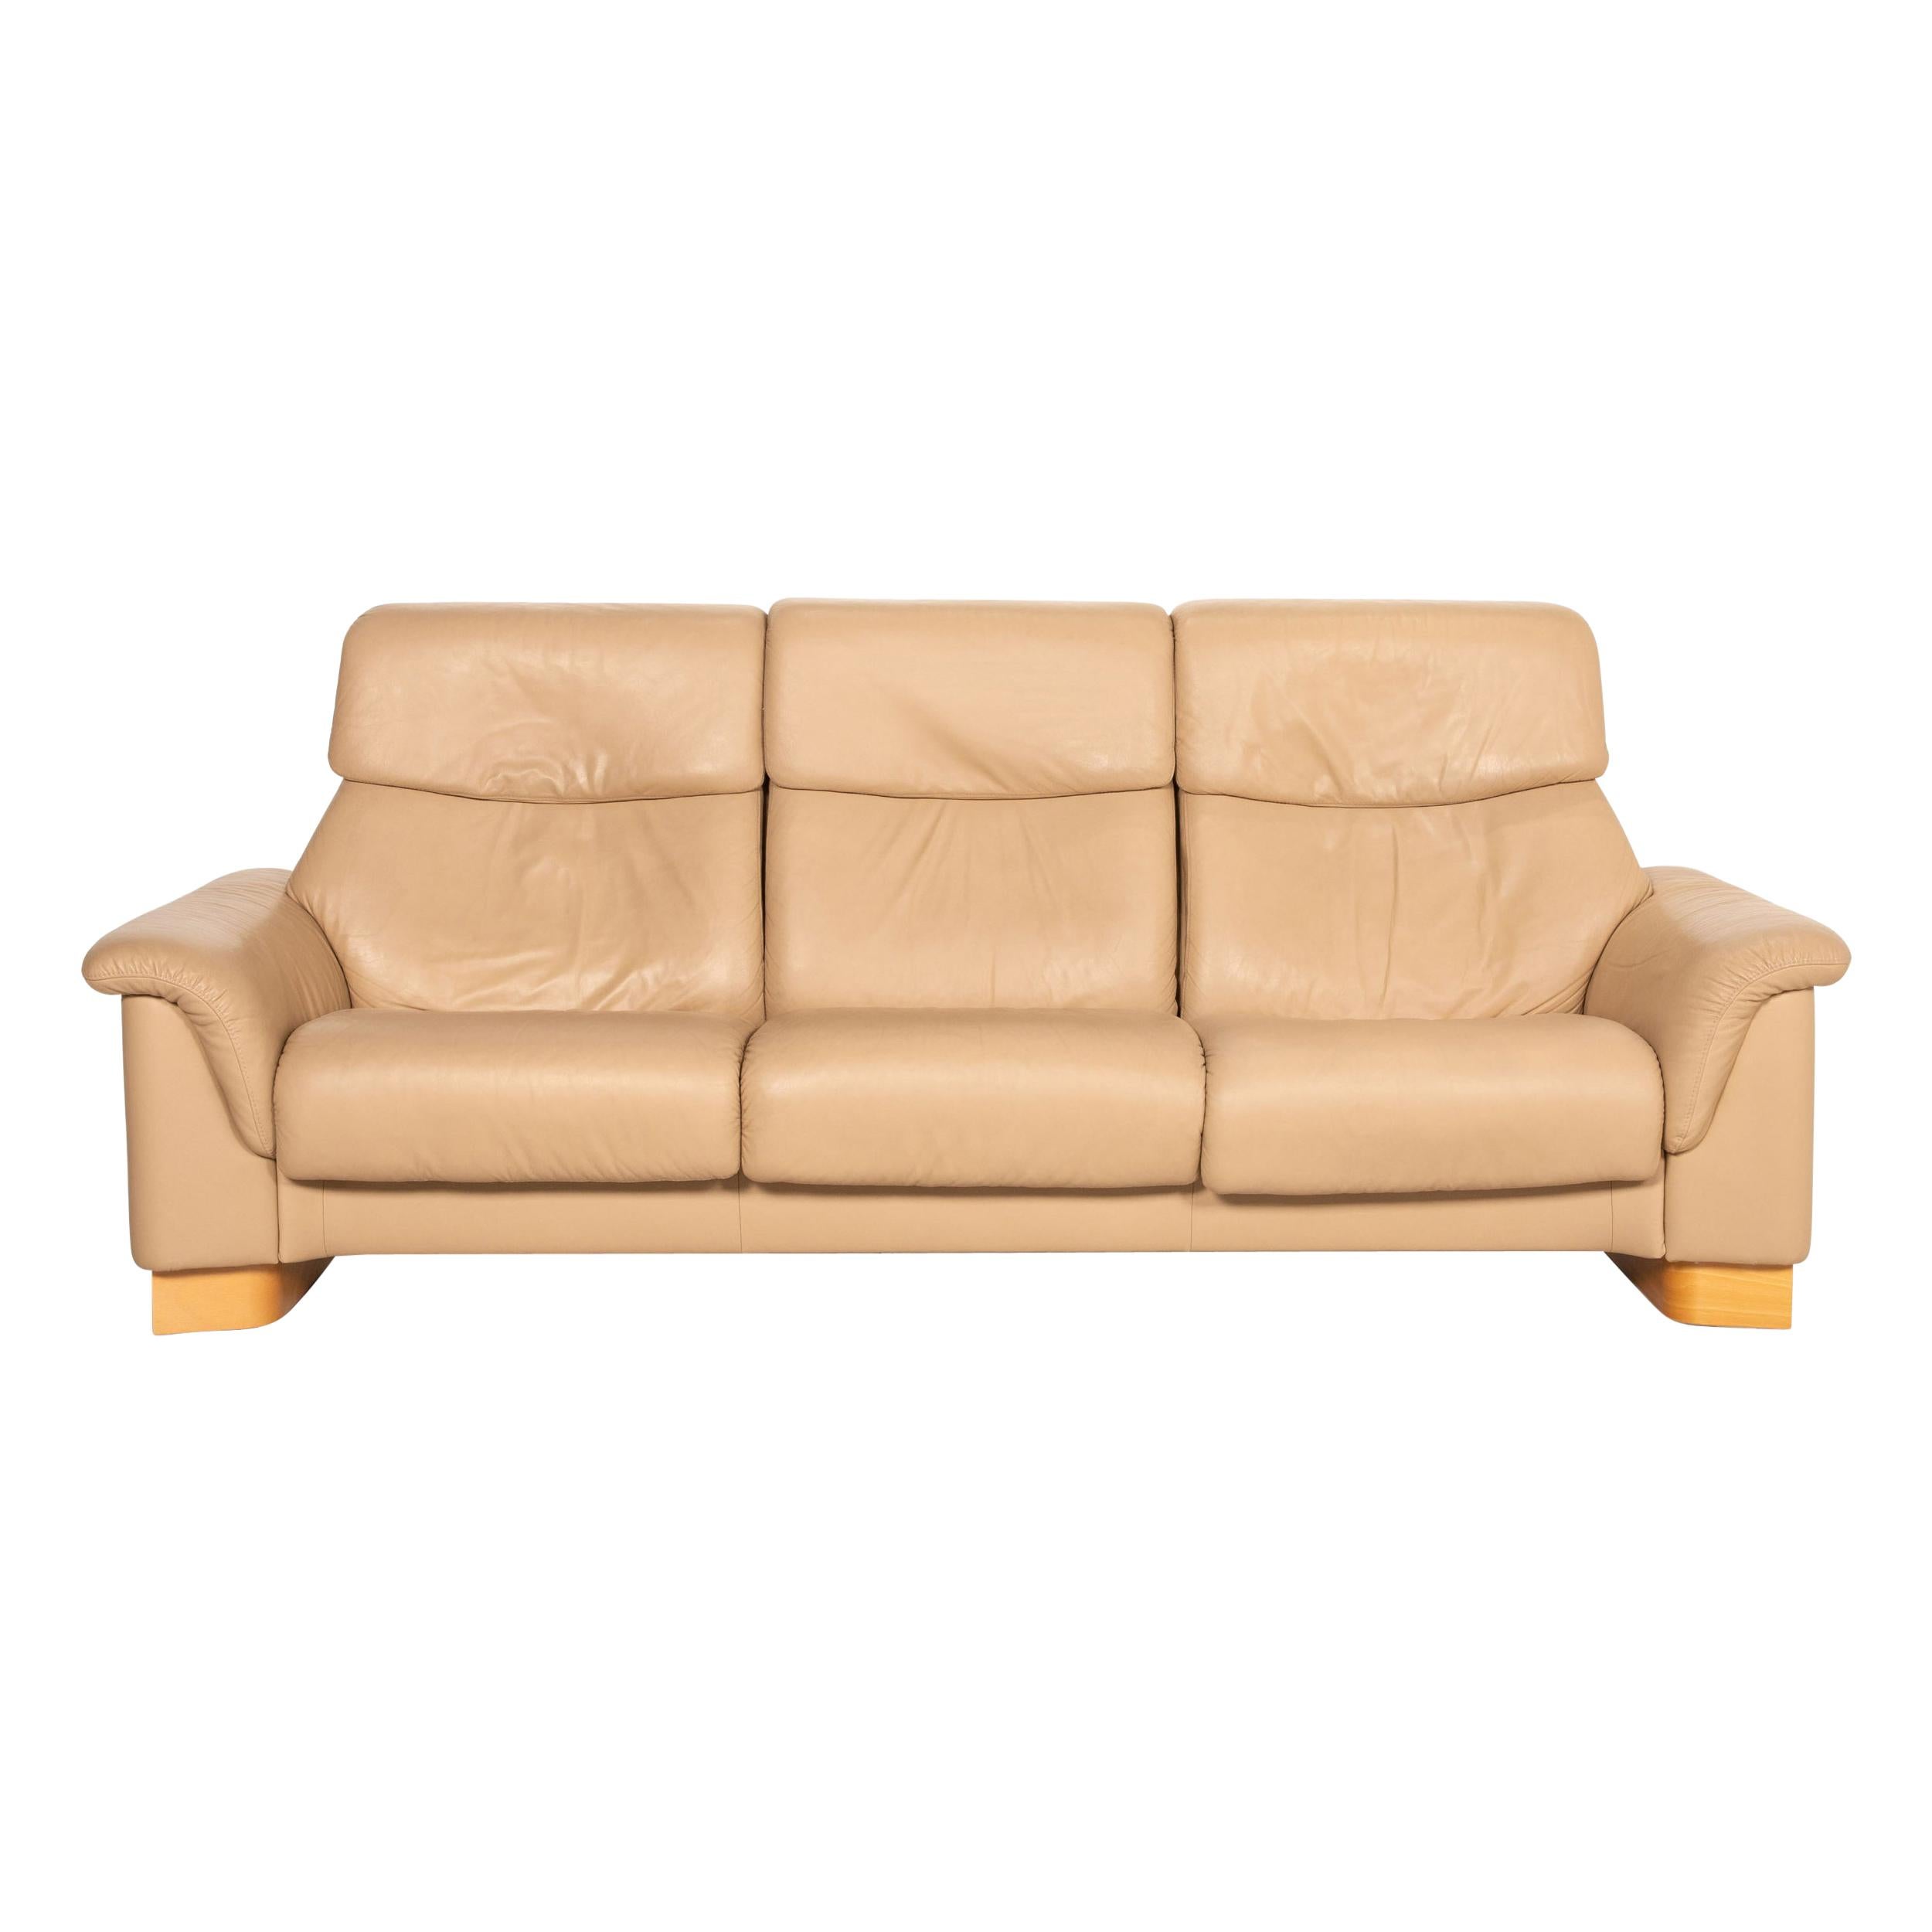 Stressless Paradise Leather Sofa Beige Three Seater